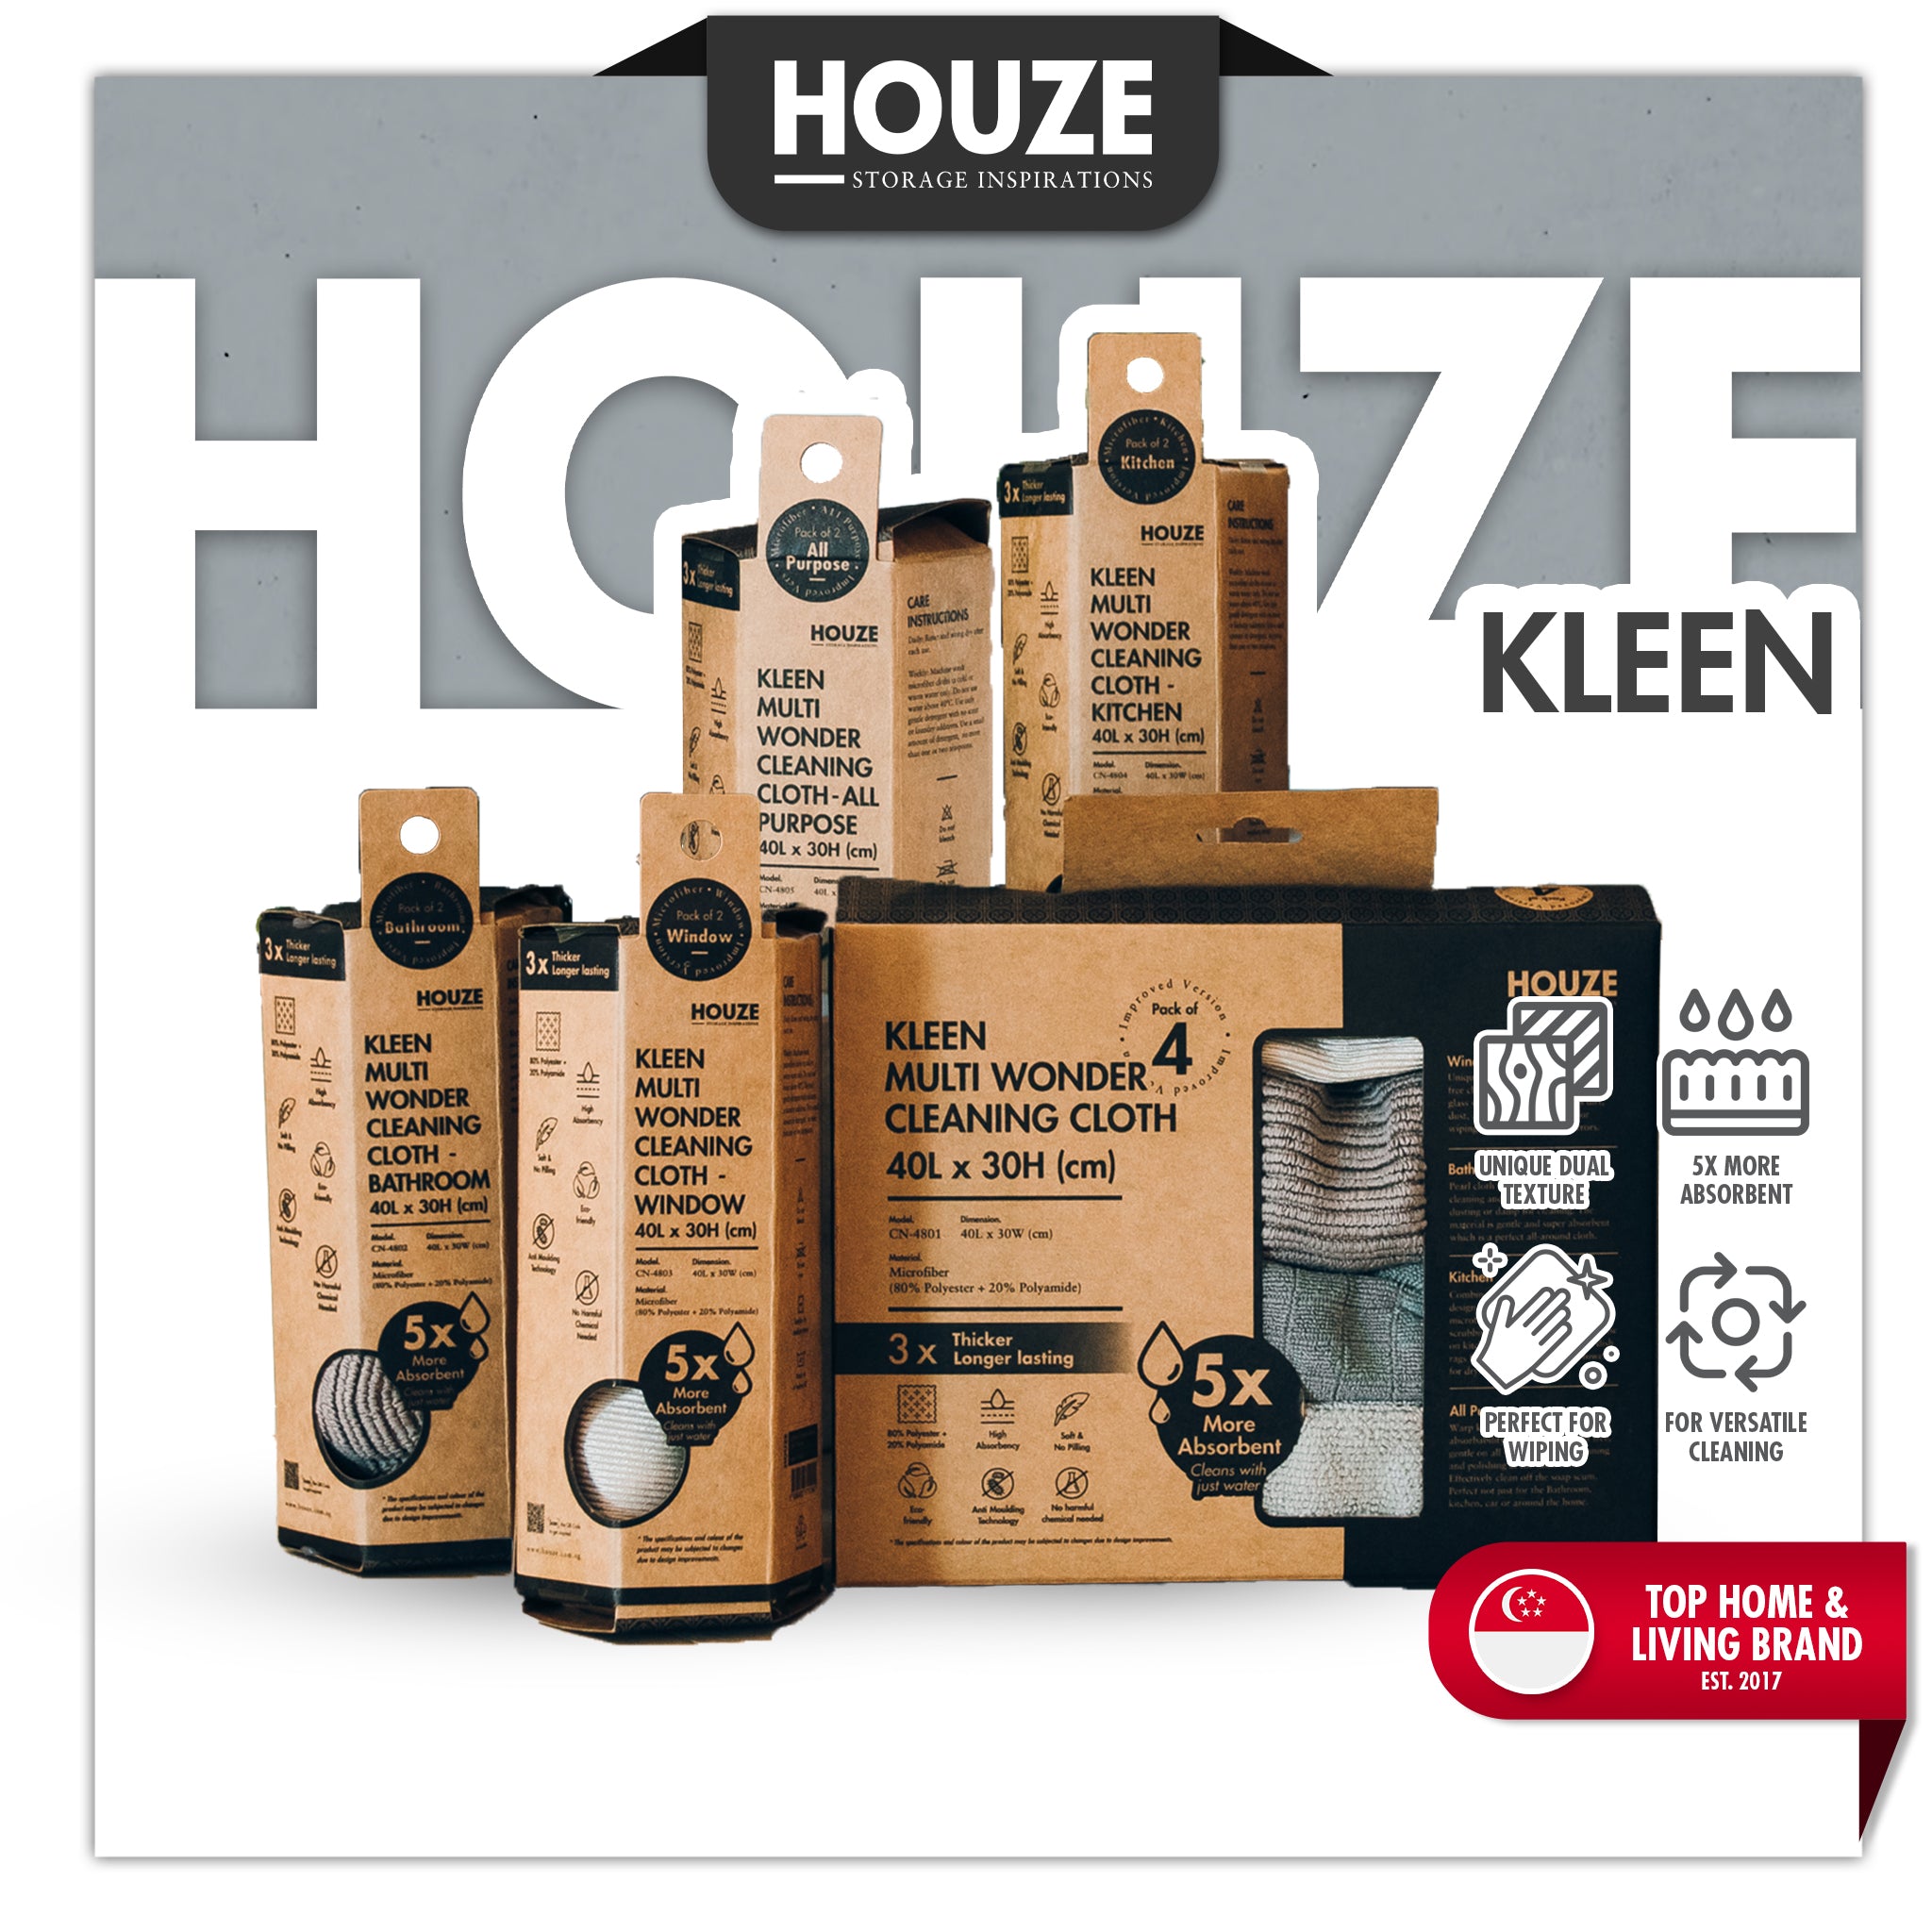 HOUZE - KLEEN Multi Wonder Cleaning Cloth